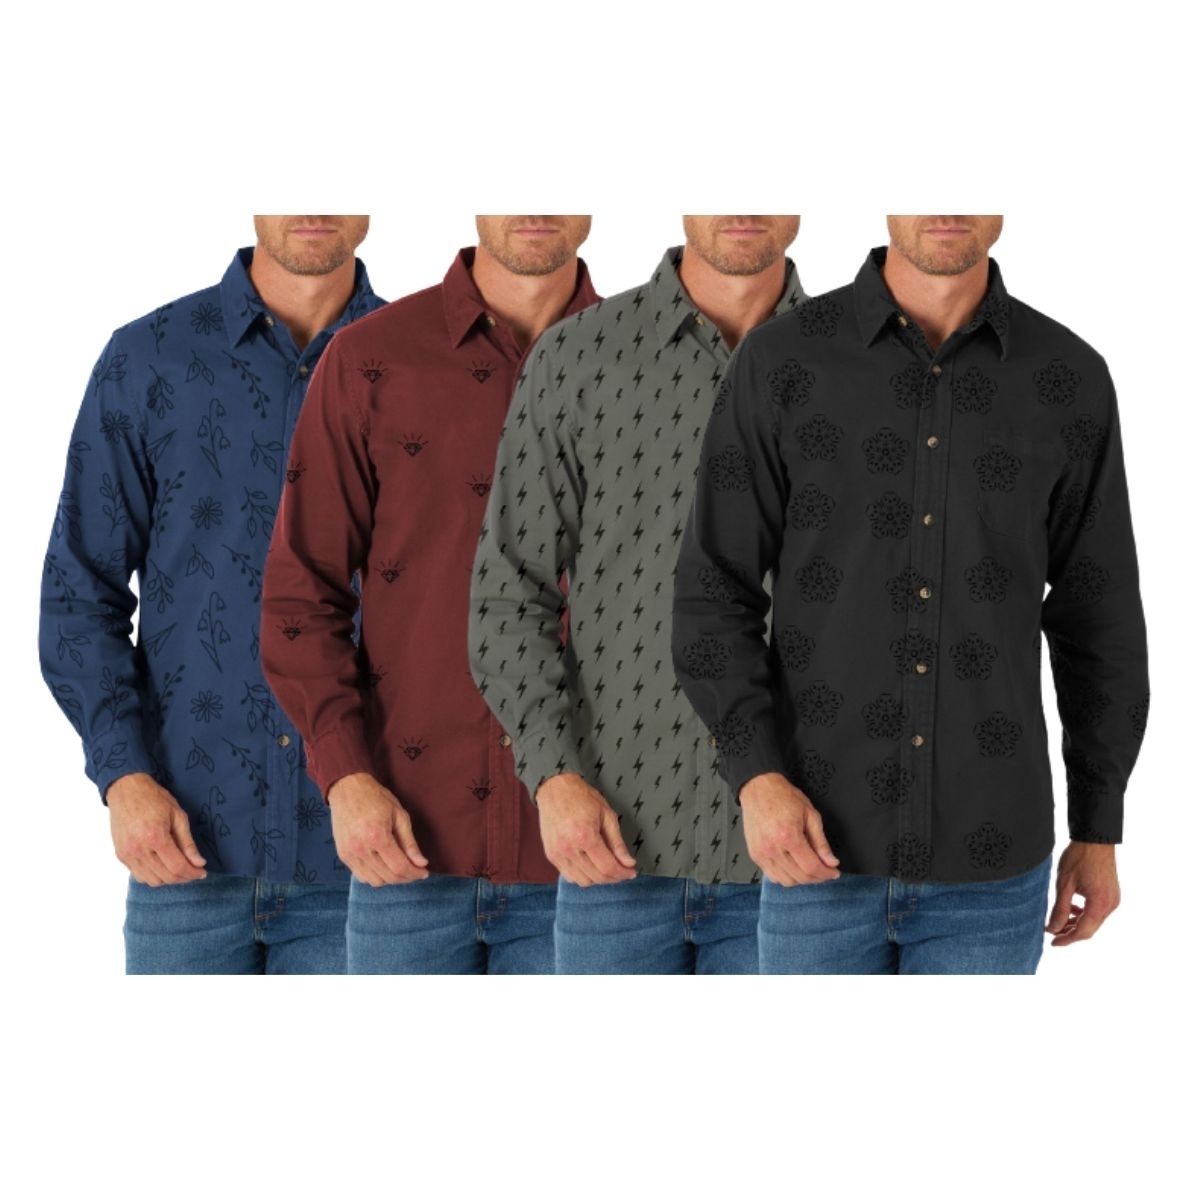 4-Pack: Men's Formal Classic Slim Fit Button Down Long Sleeve Printed Dress Shirt - Medium